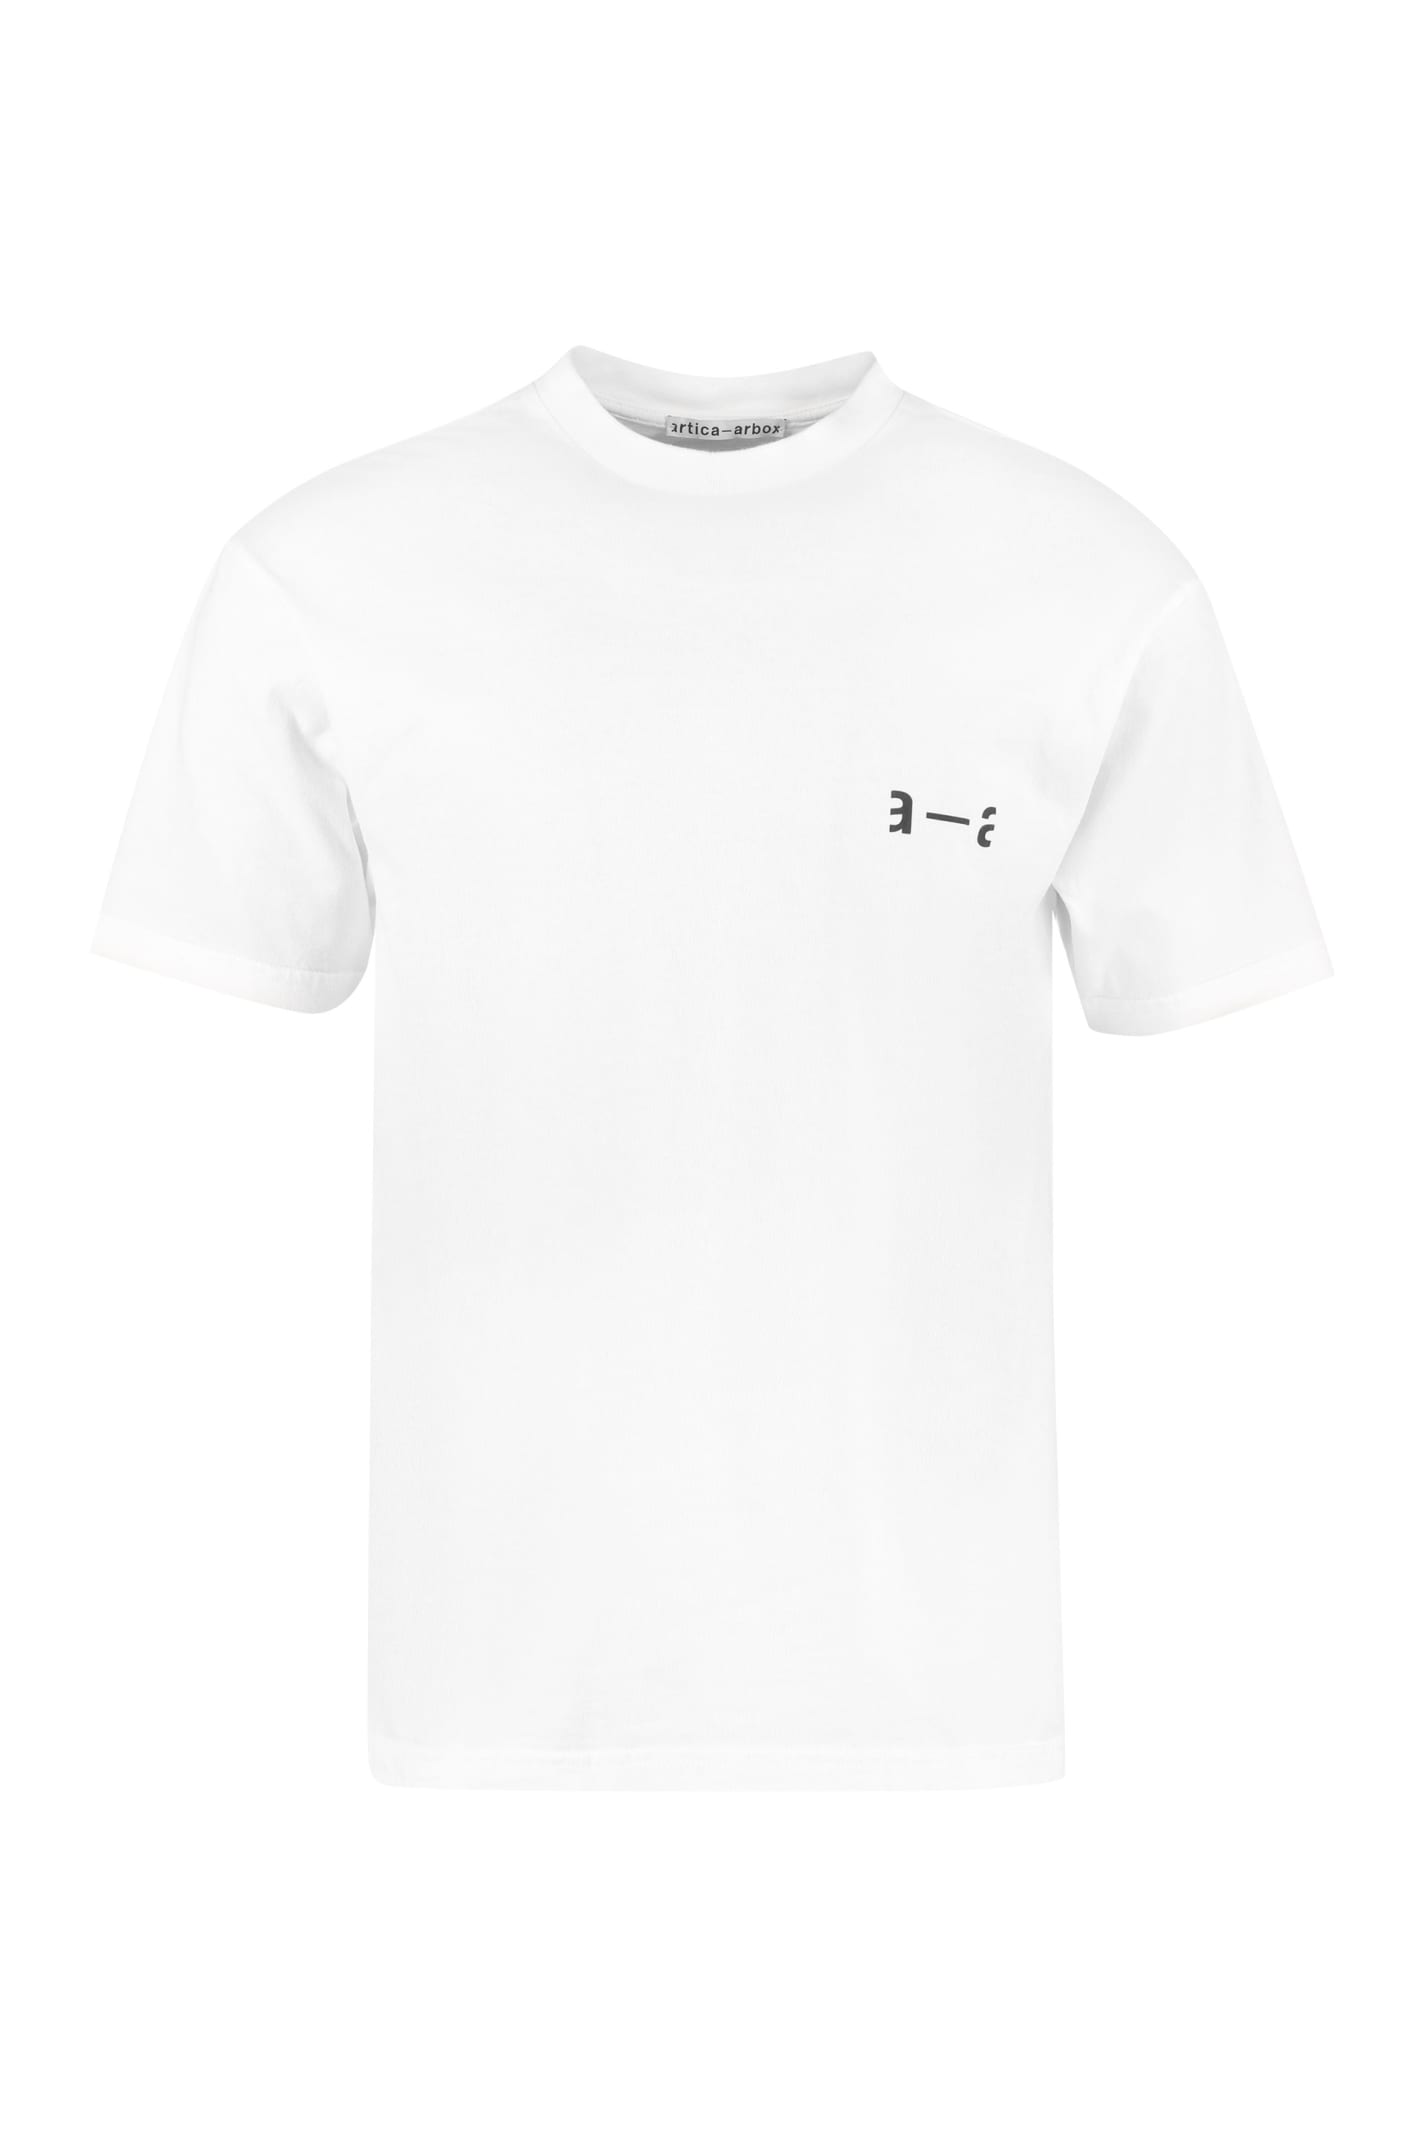 Artica Arbox Logo Print Cotton T-shirt In White